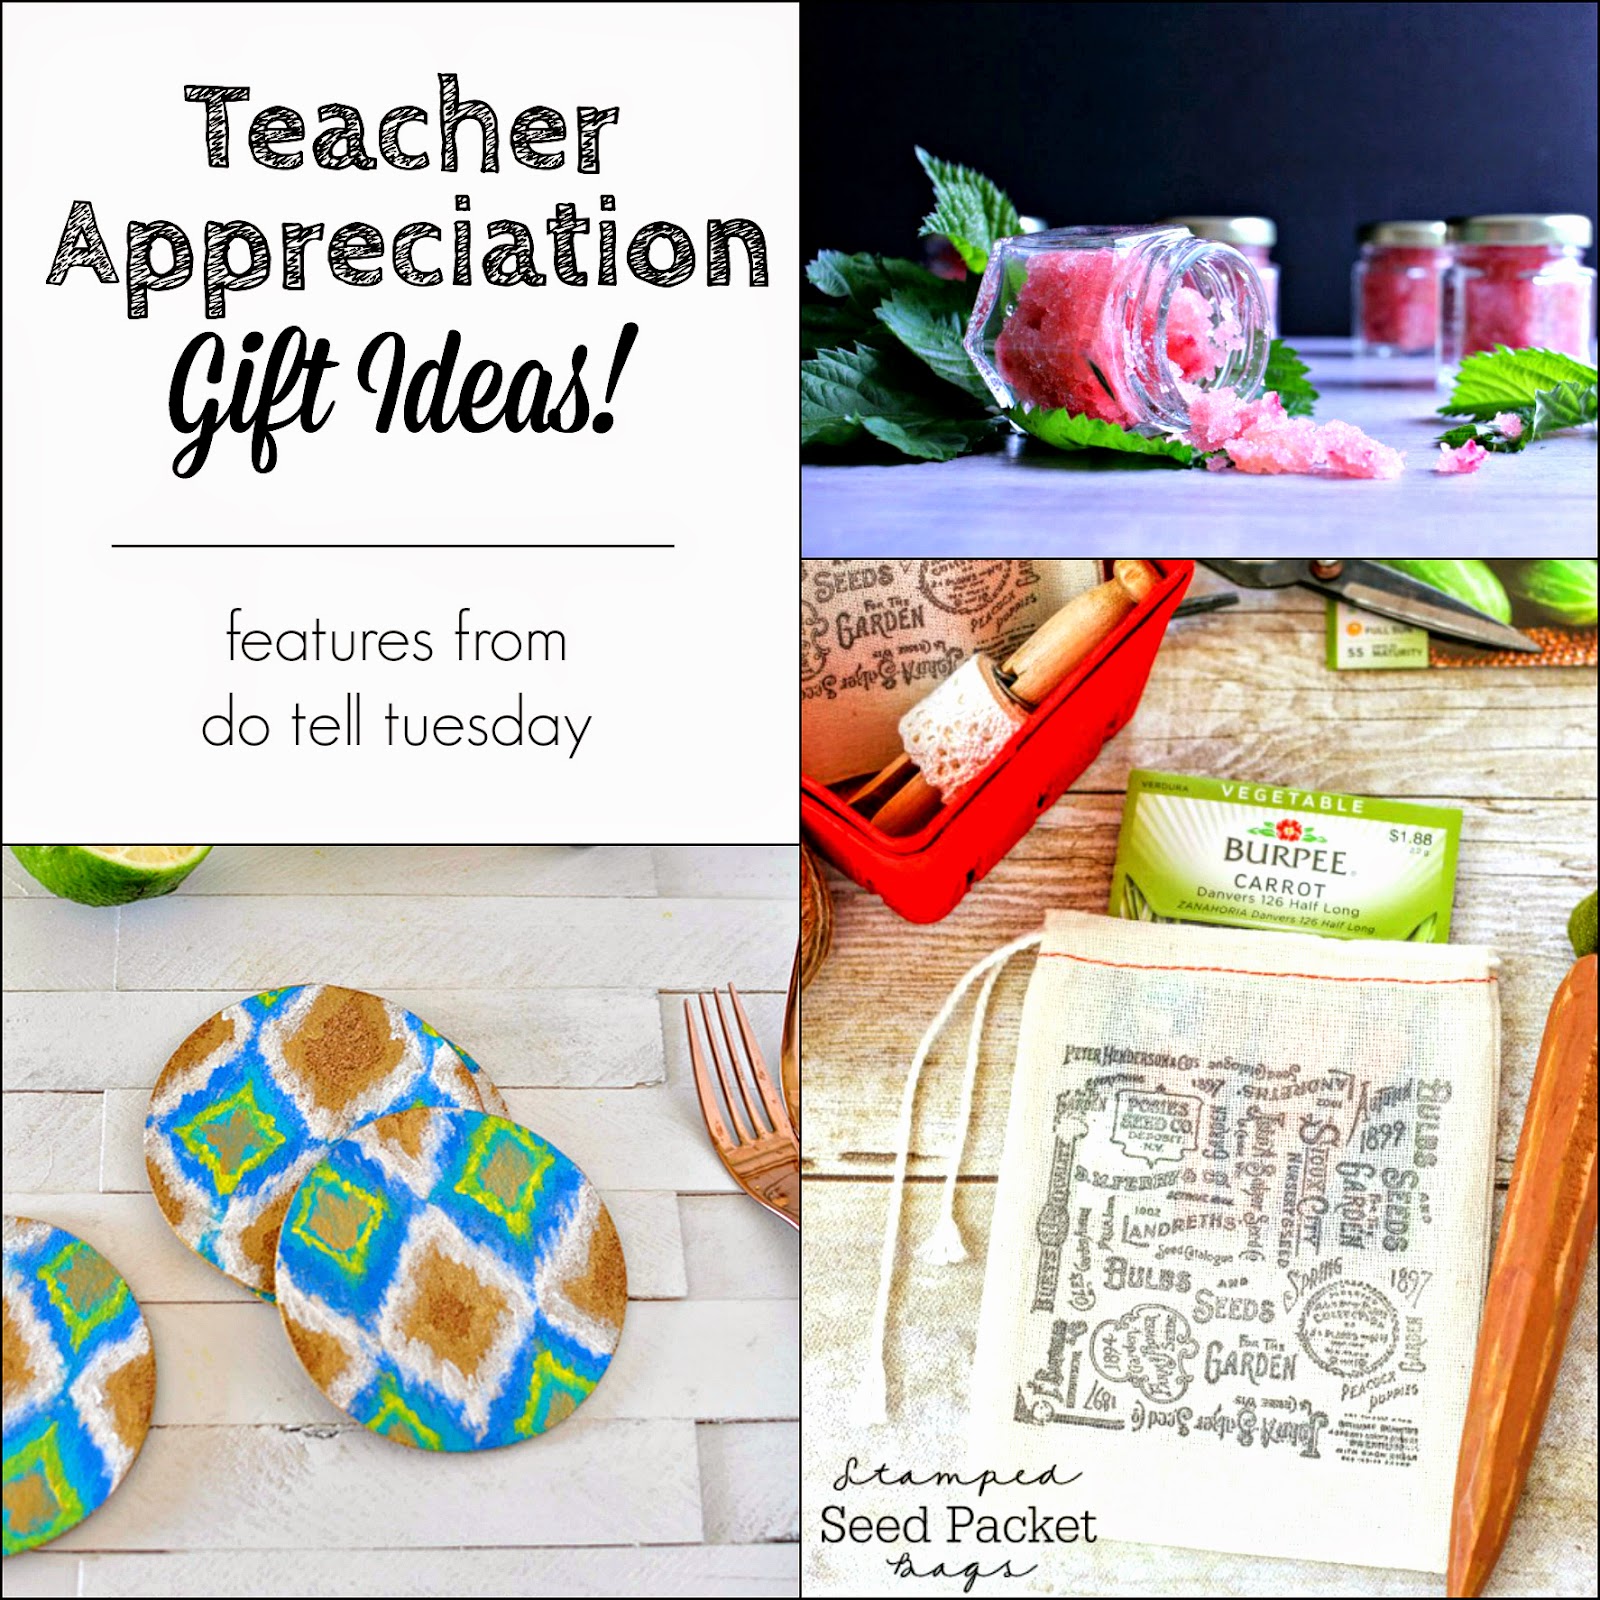 Teacher Appreciation Gift Ideas on Do Tell Tuesday at Diane's Vintage Zest!